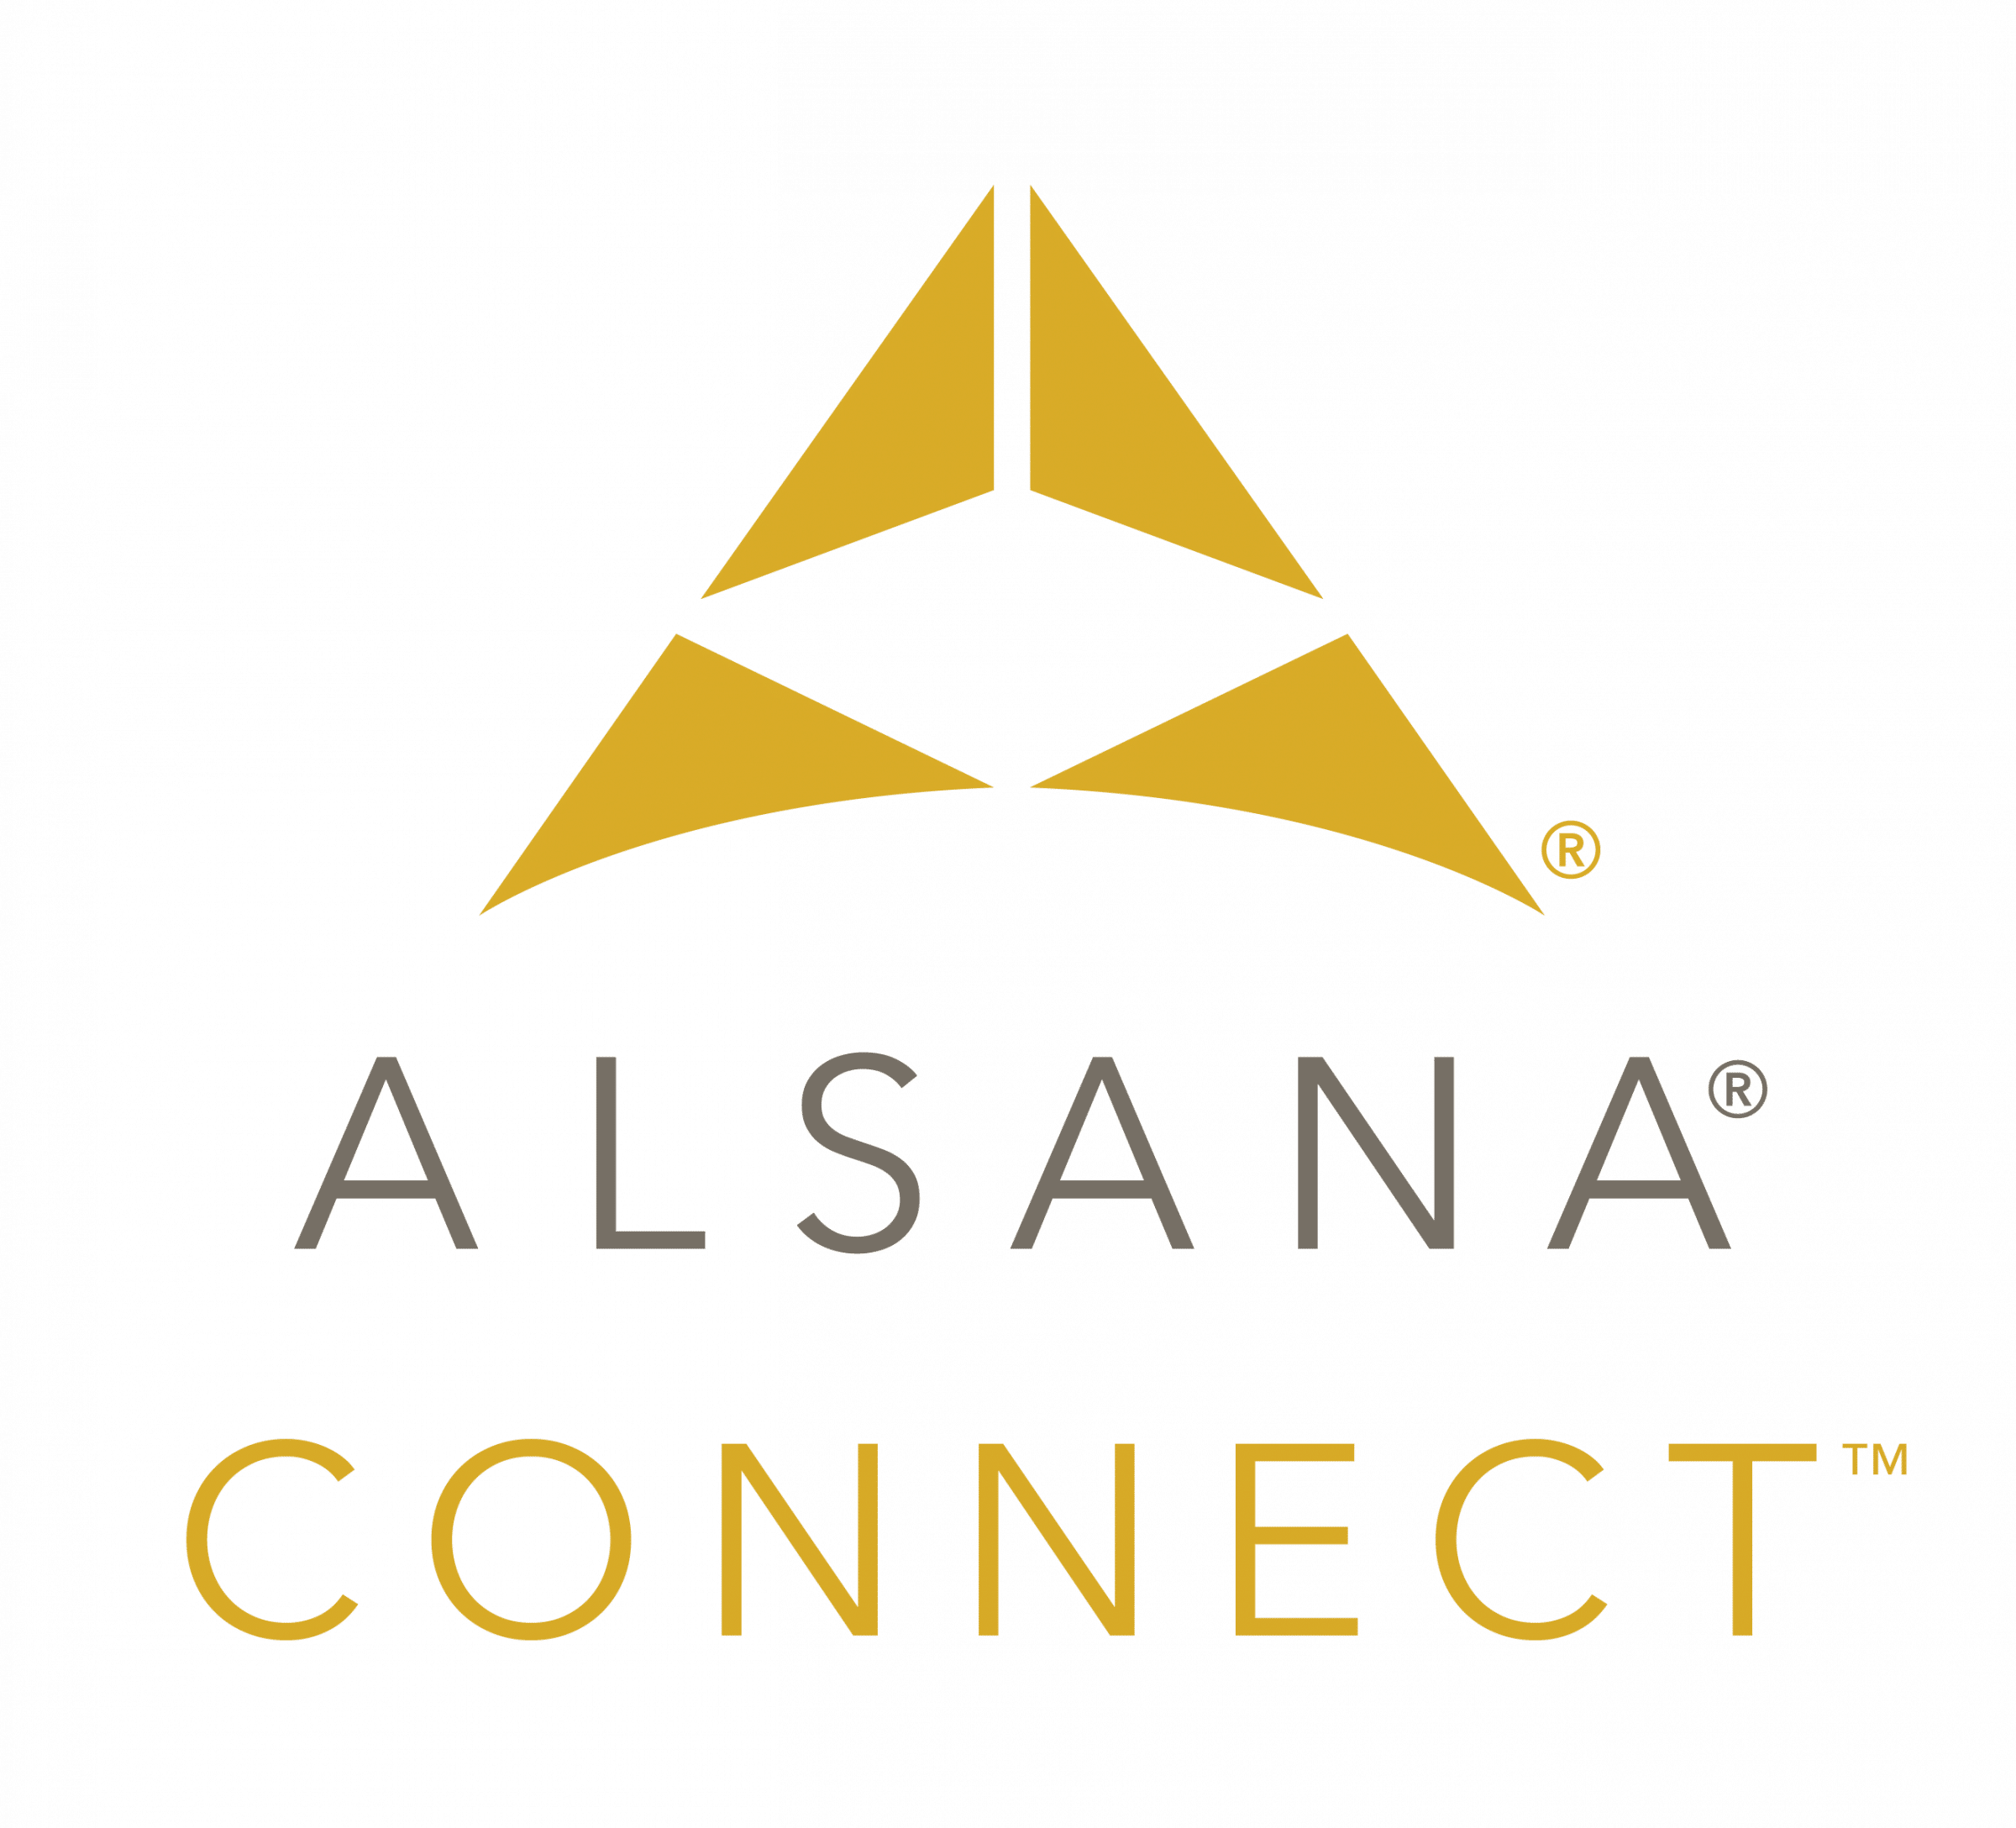 Alsana Connect logo